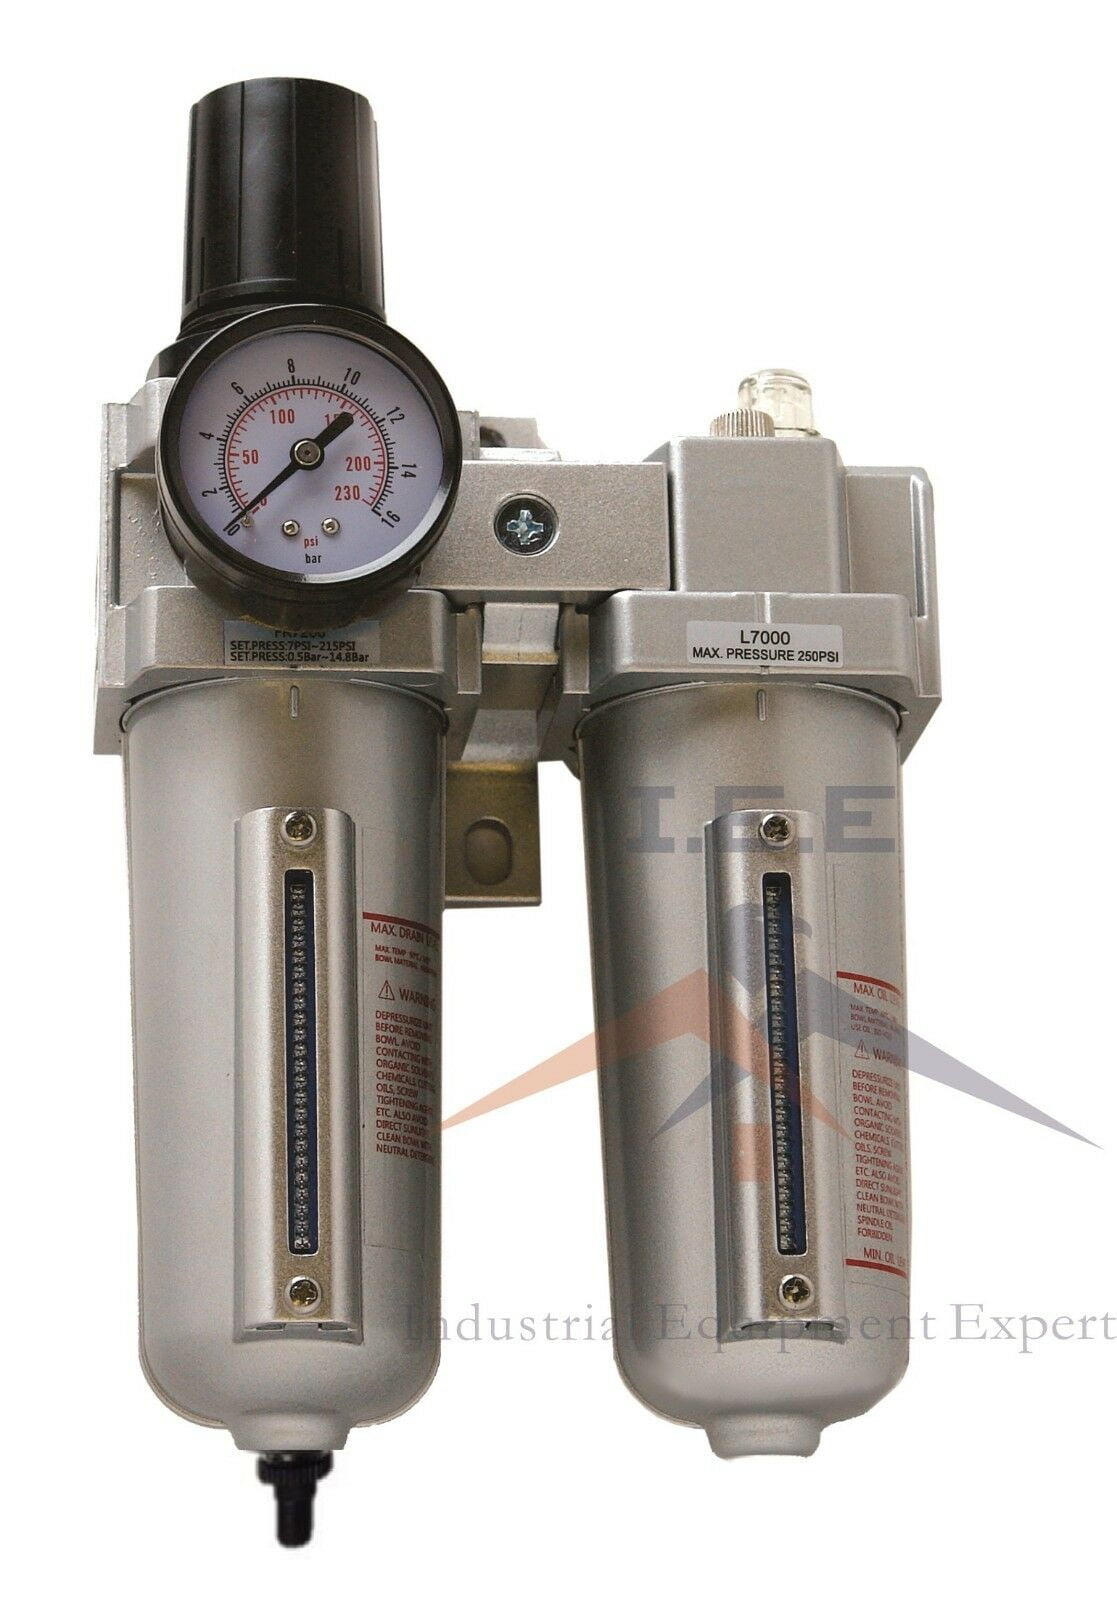 Norgren USA Pneumatic Air Tool HD Water Separater Filter 3/4" NPT 2F2-65 